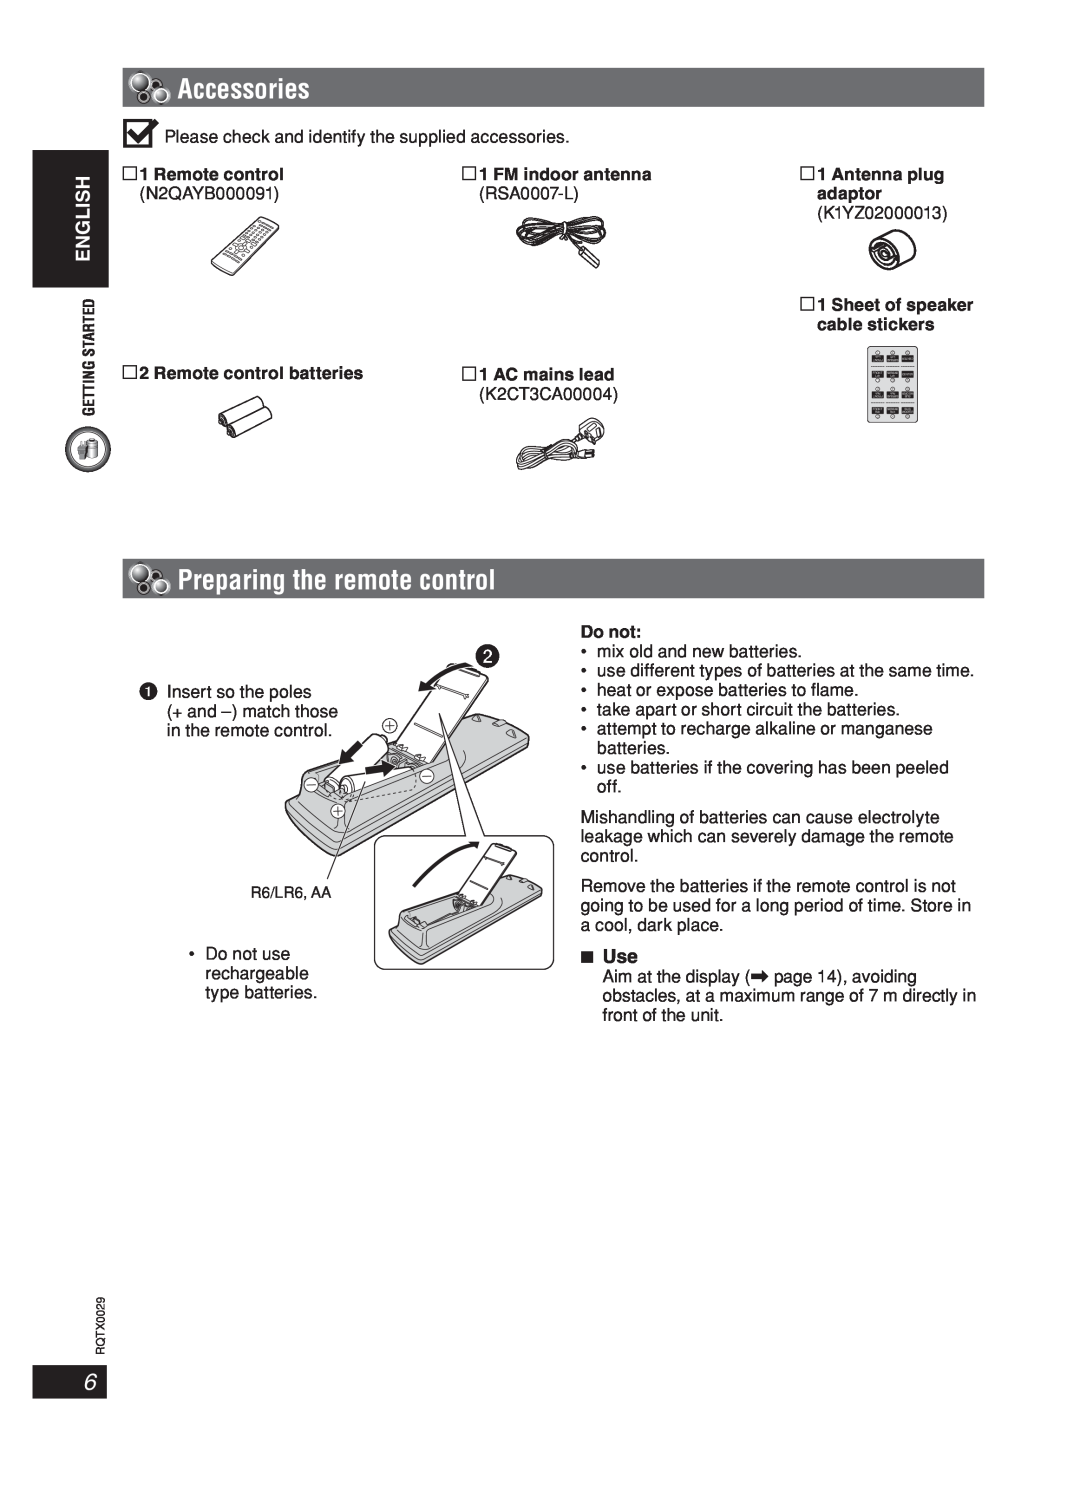 Panasonic sc-pt150 manual Accessories, Preparing the remote control, 7Use 